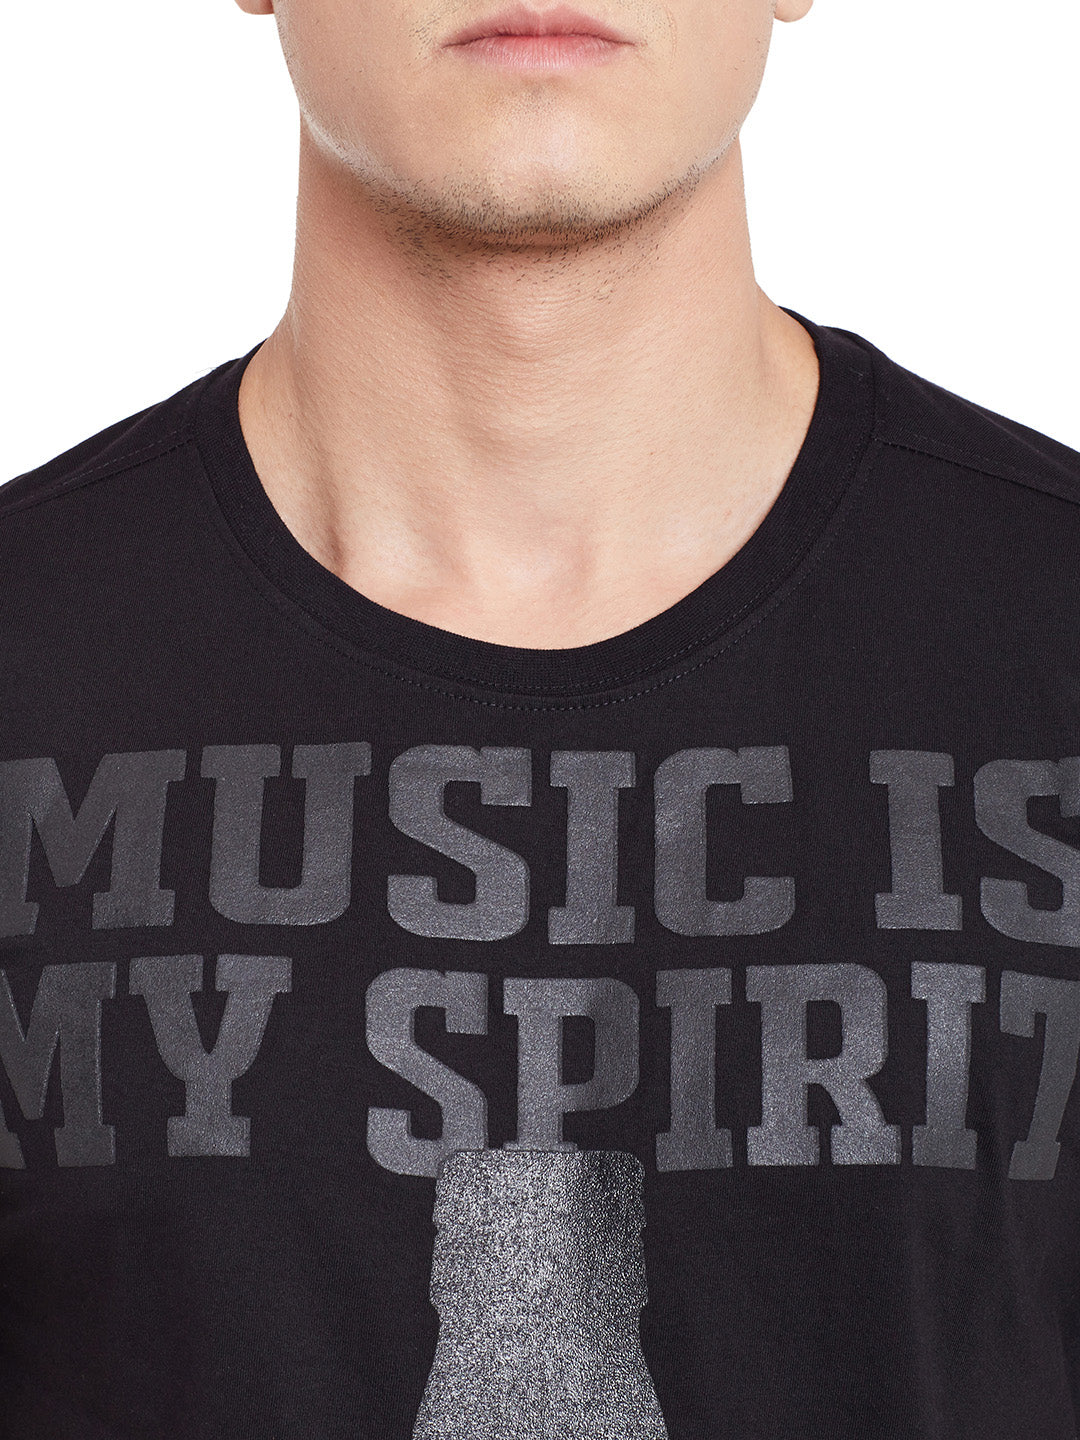 MUSIC-MY-SPIRIT